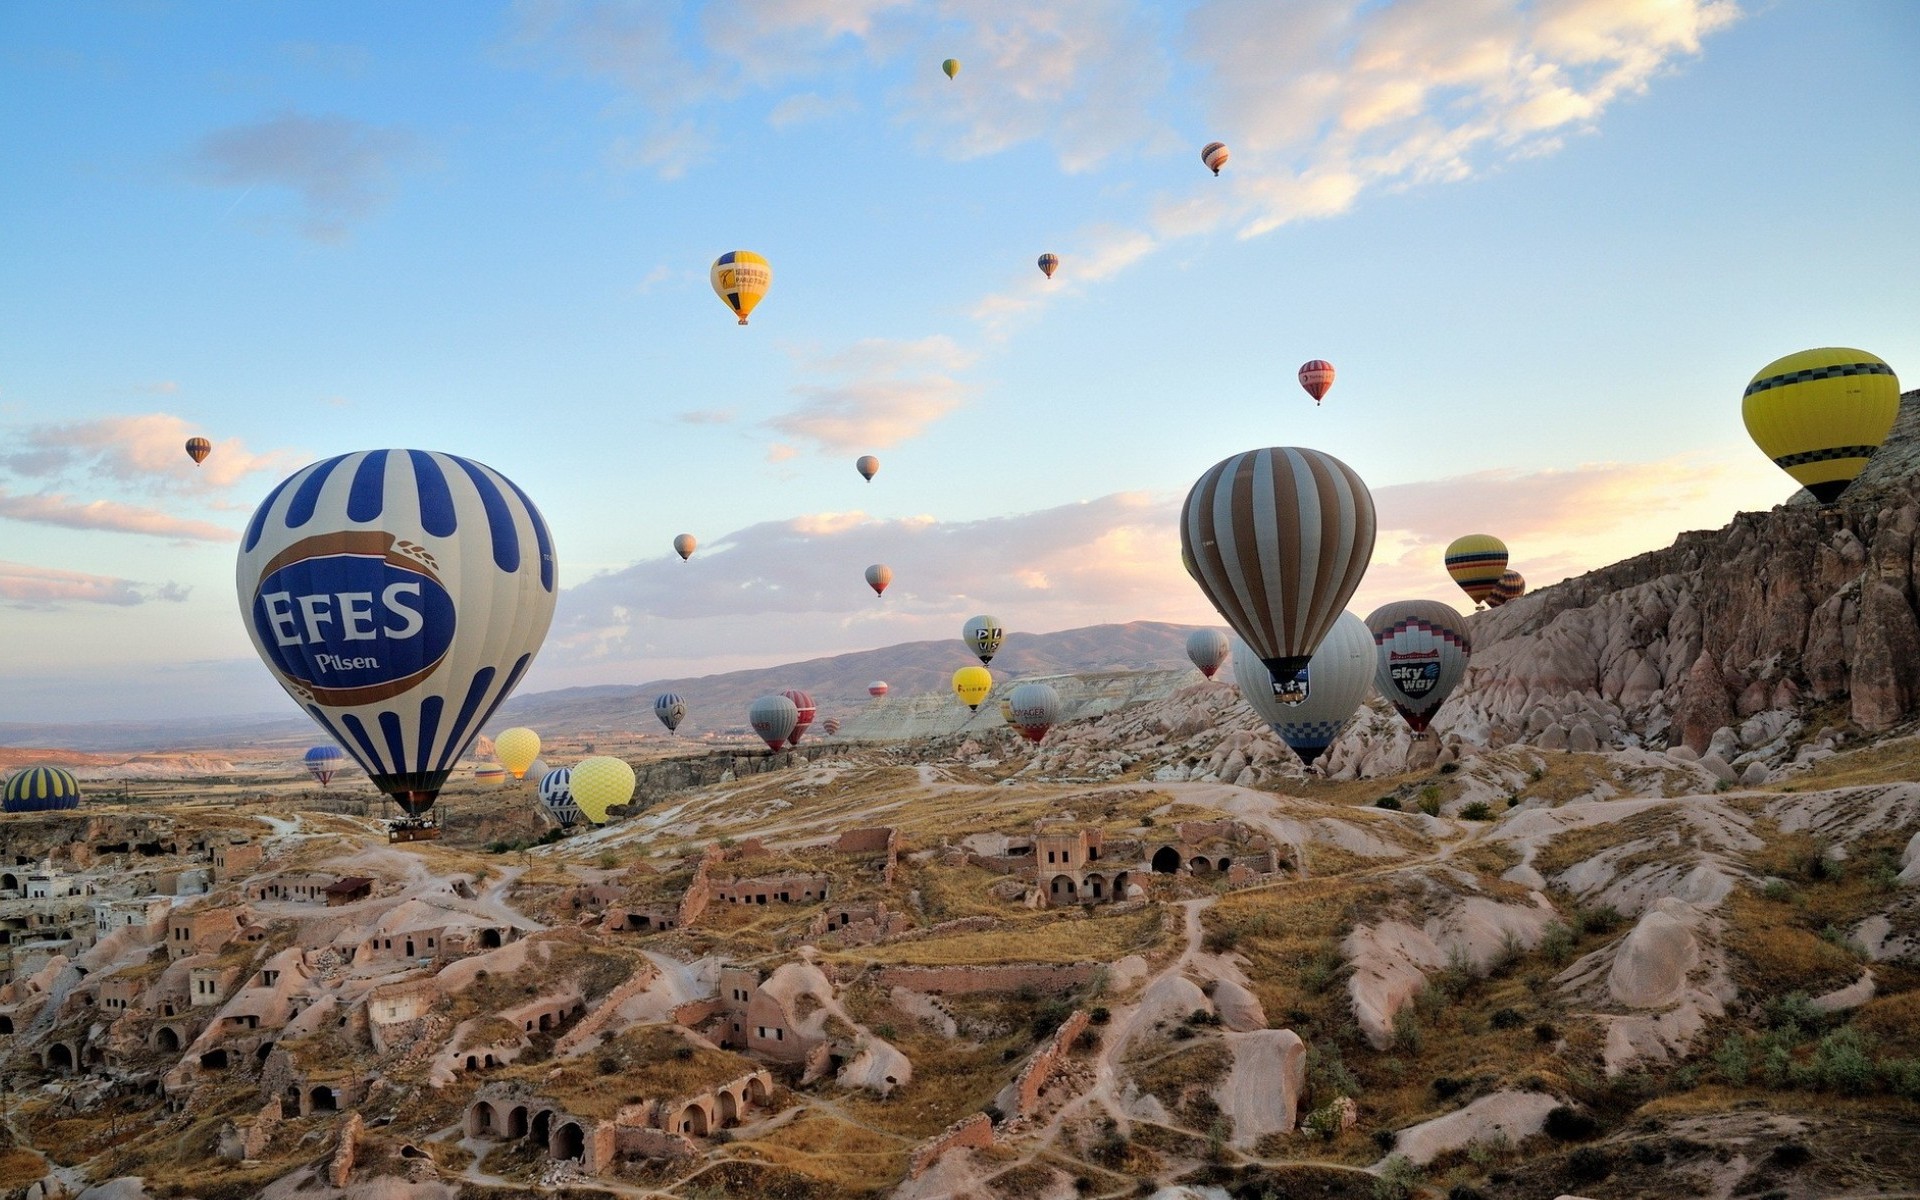 Hd desktop turkey cappadocia vehicles hot air balloon download free picture